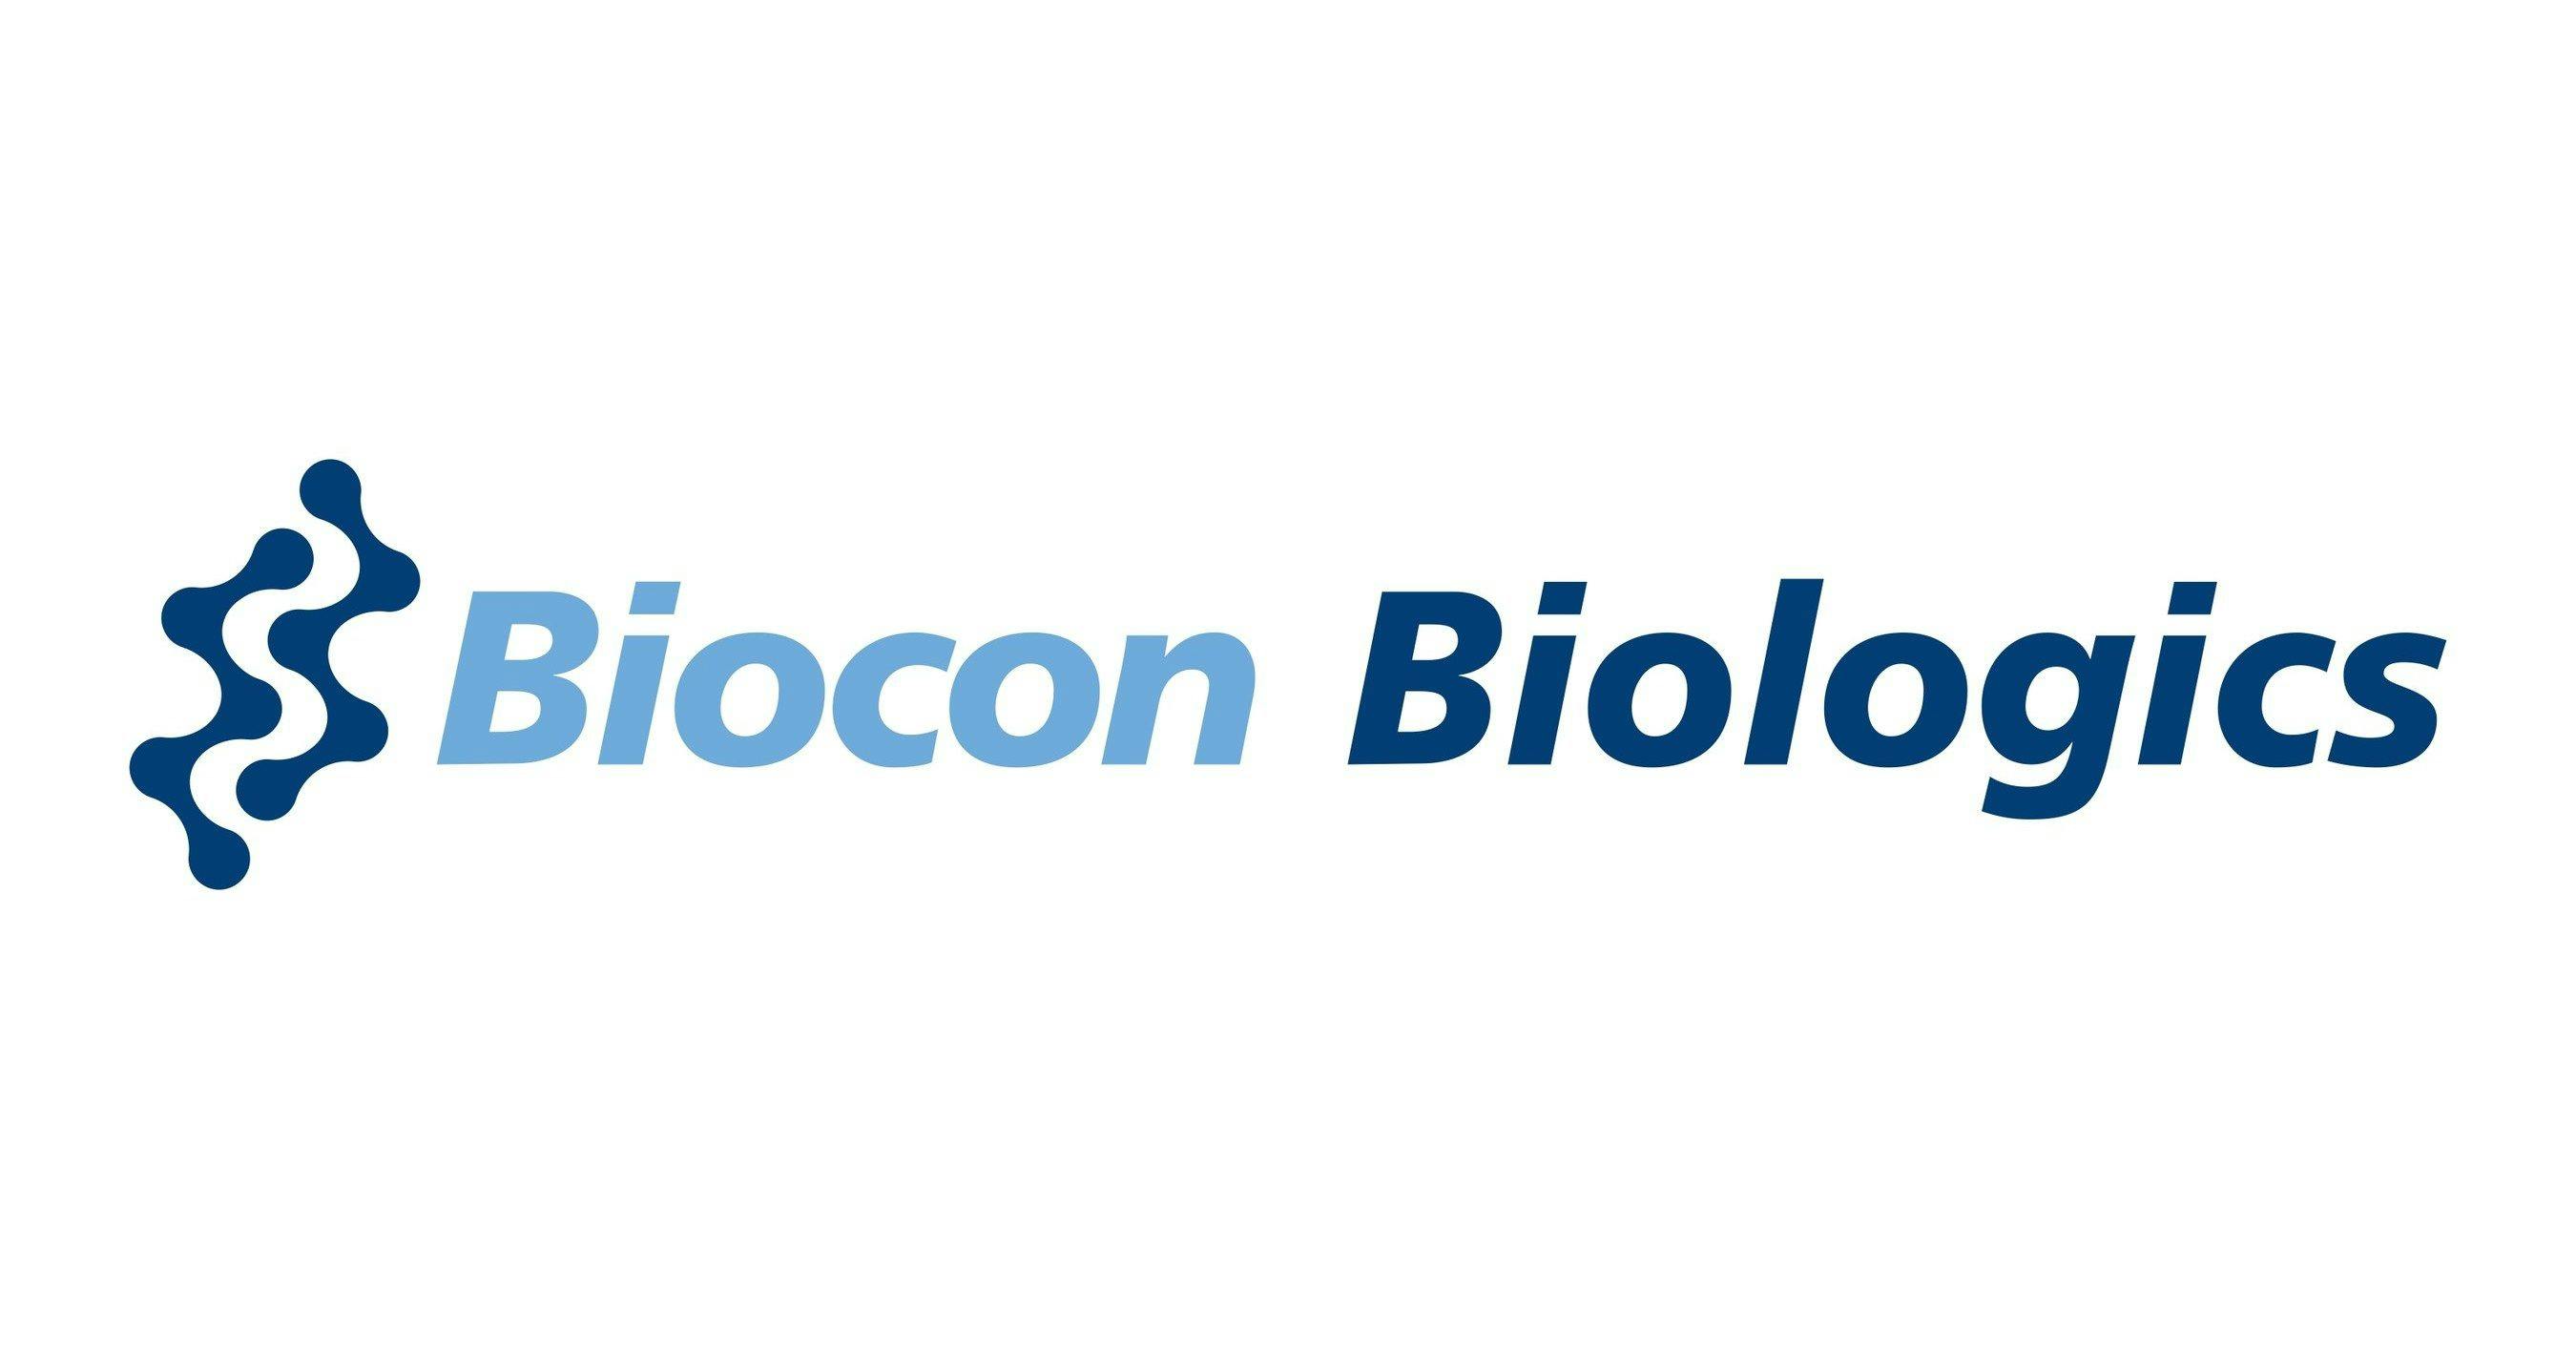 Biocon Biologics Completes $3 Billion Acquisition of Viatris’ Biosimilars